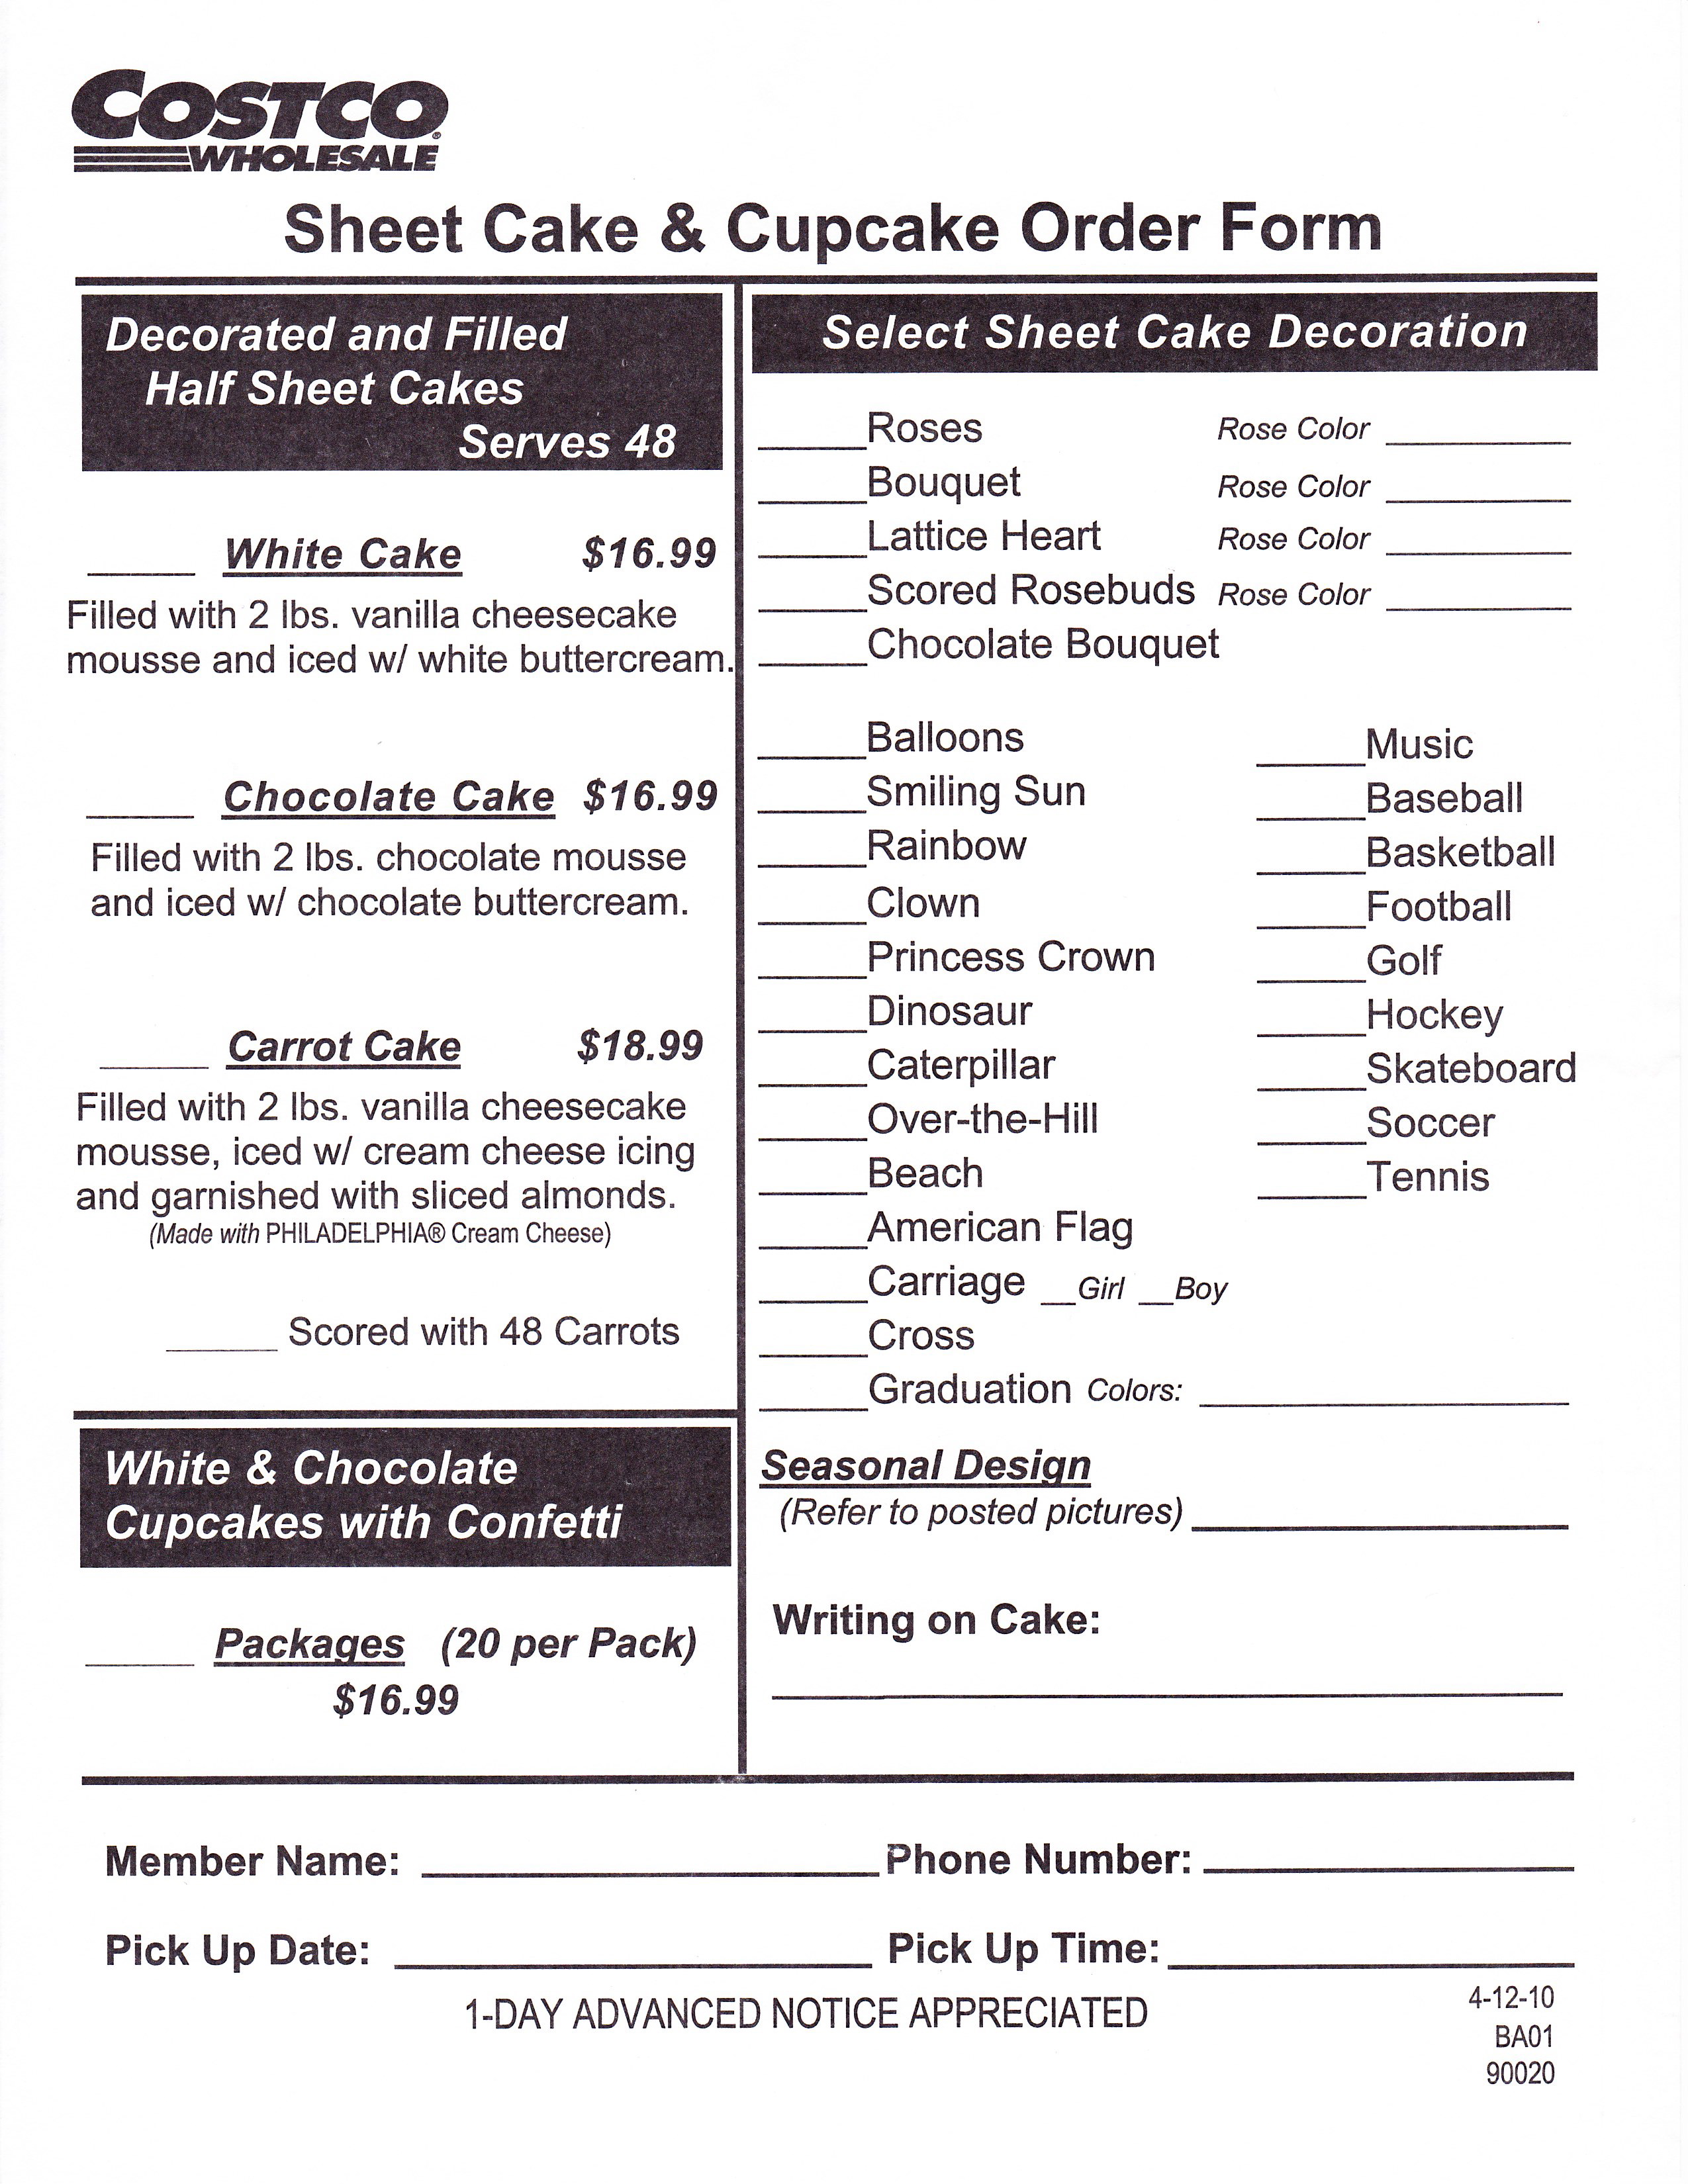 sams club cake order form